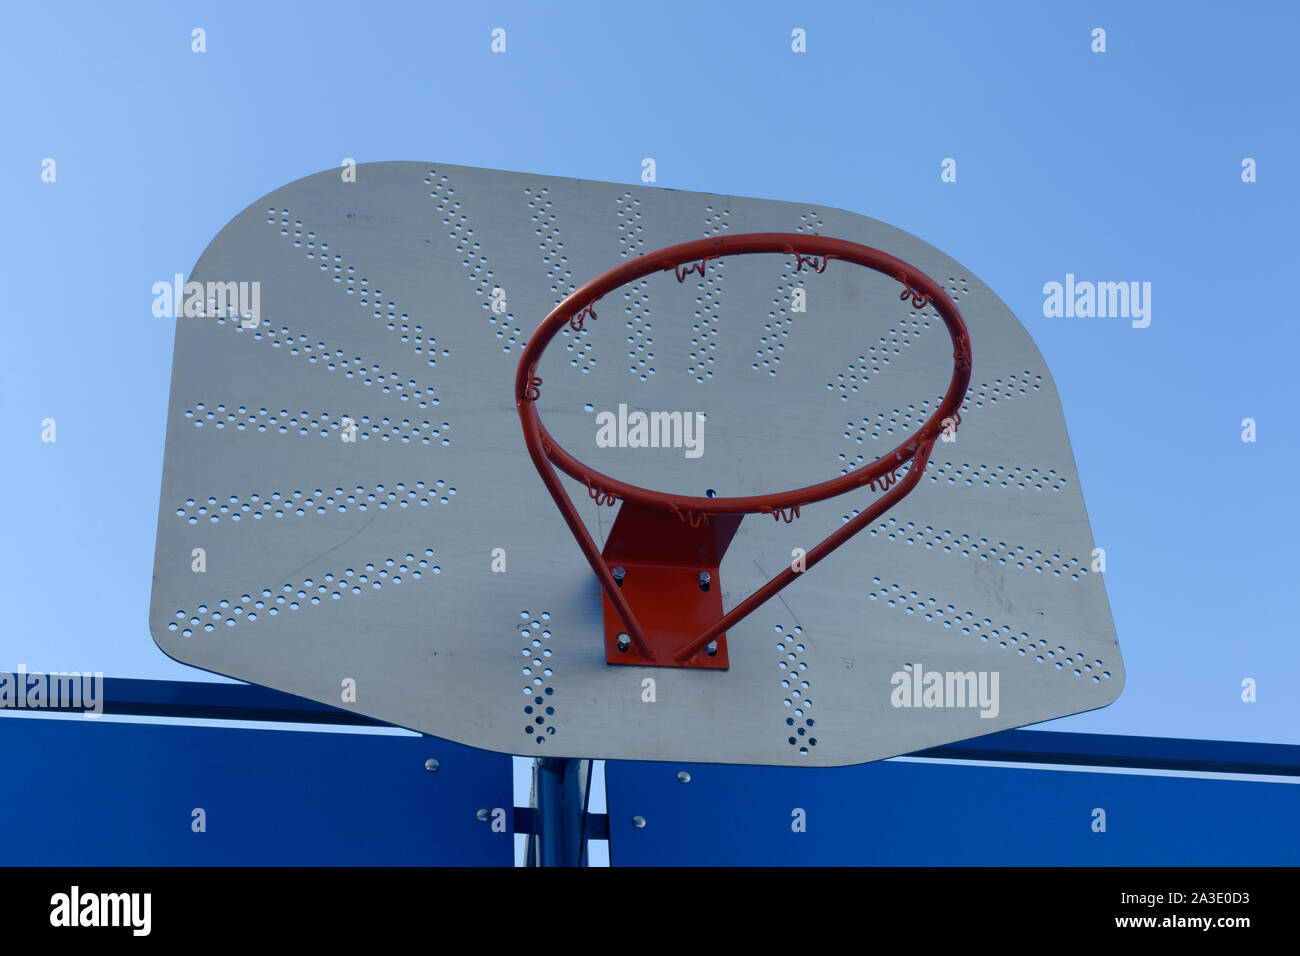 Outdoor basketball hoop against a blue sky - street basketball Stock Photo